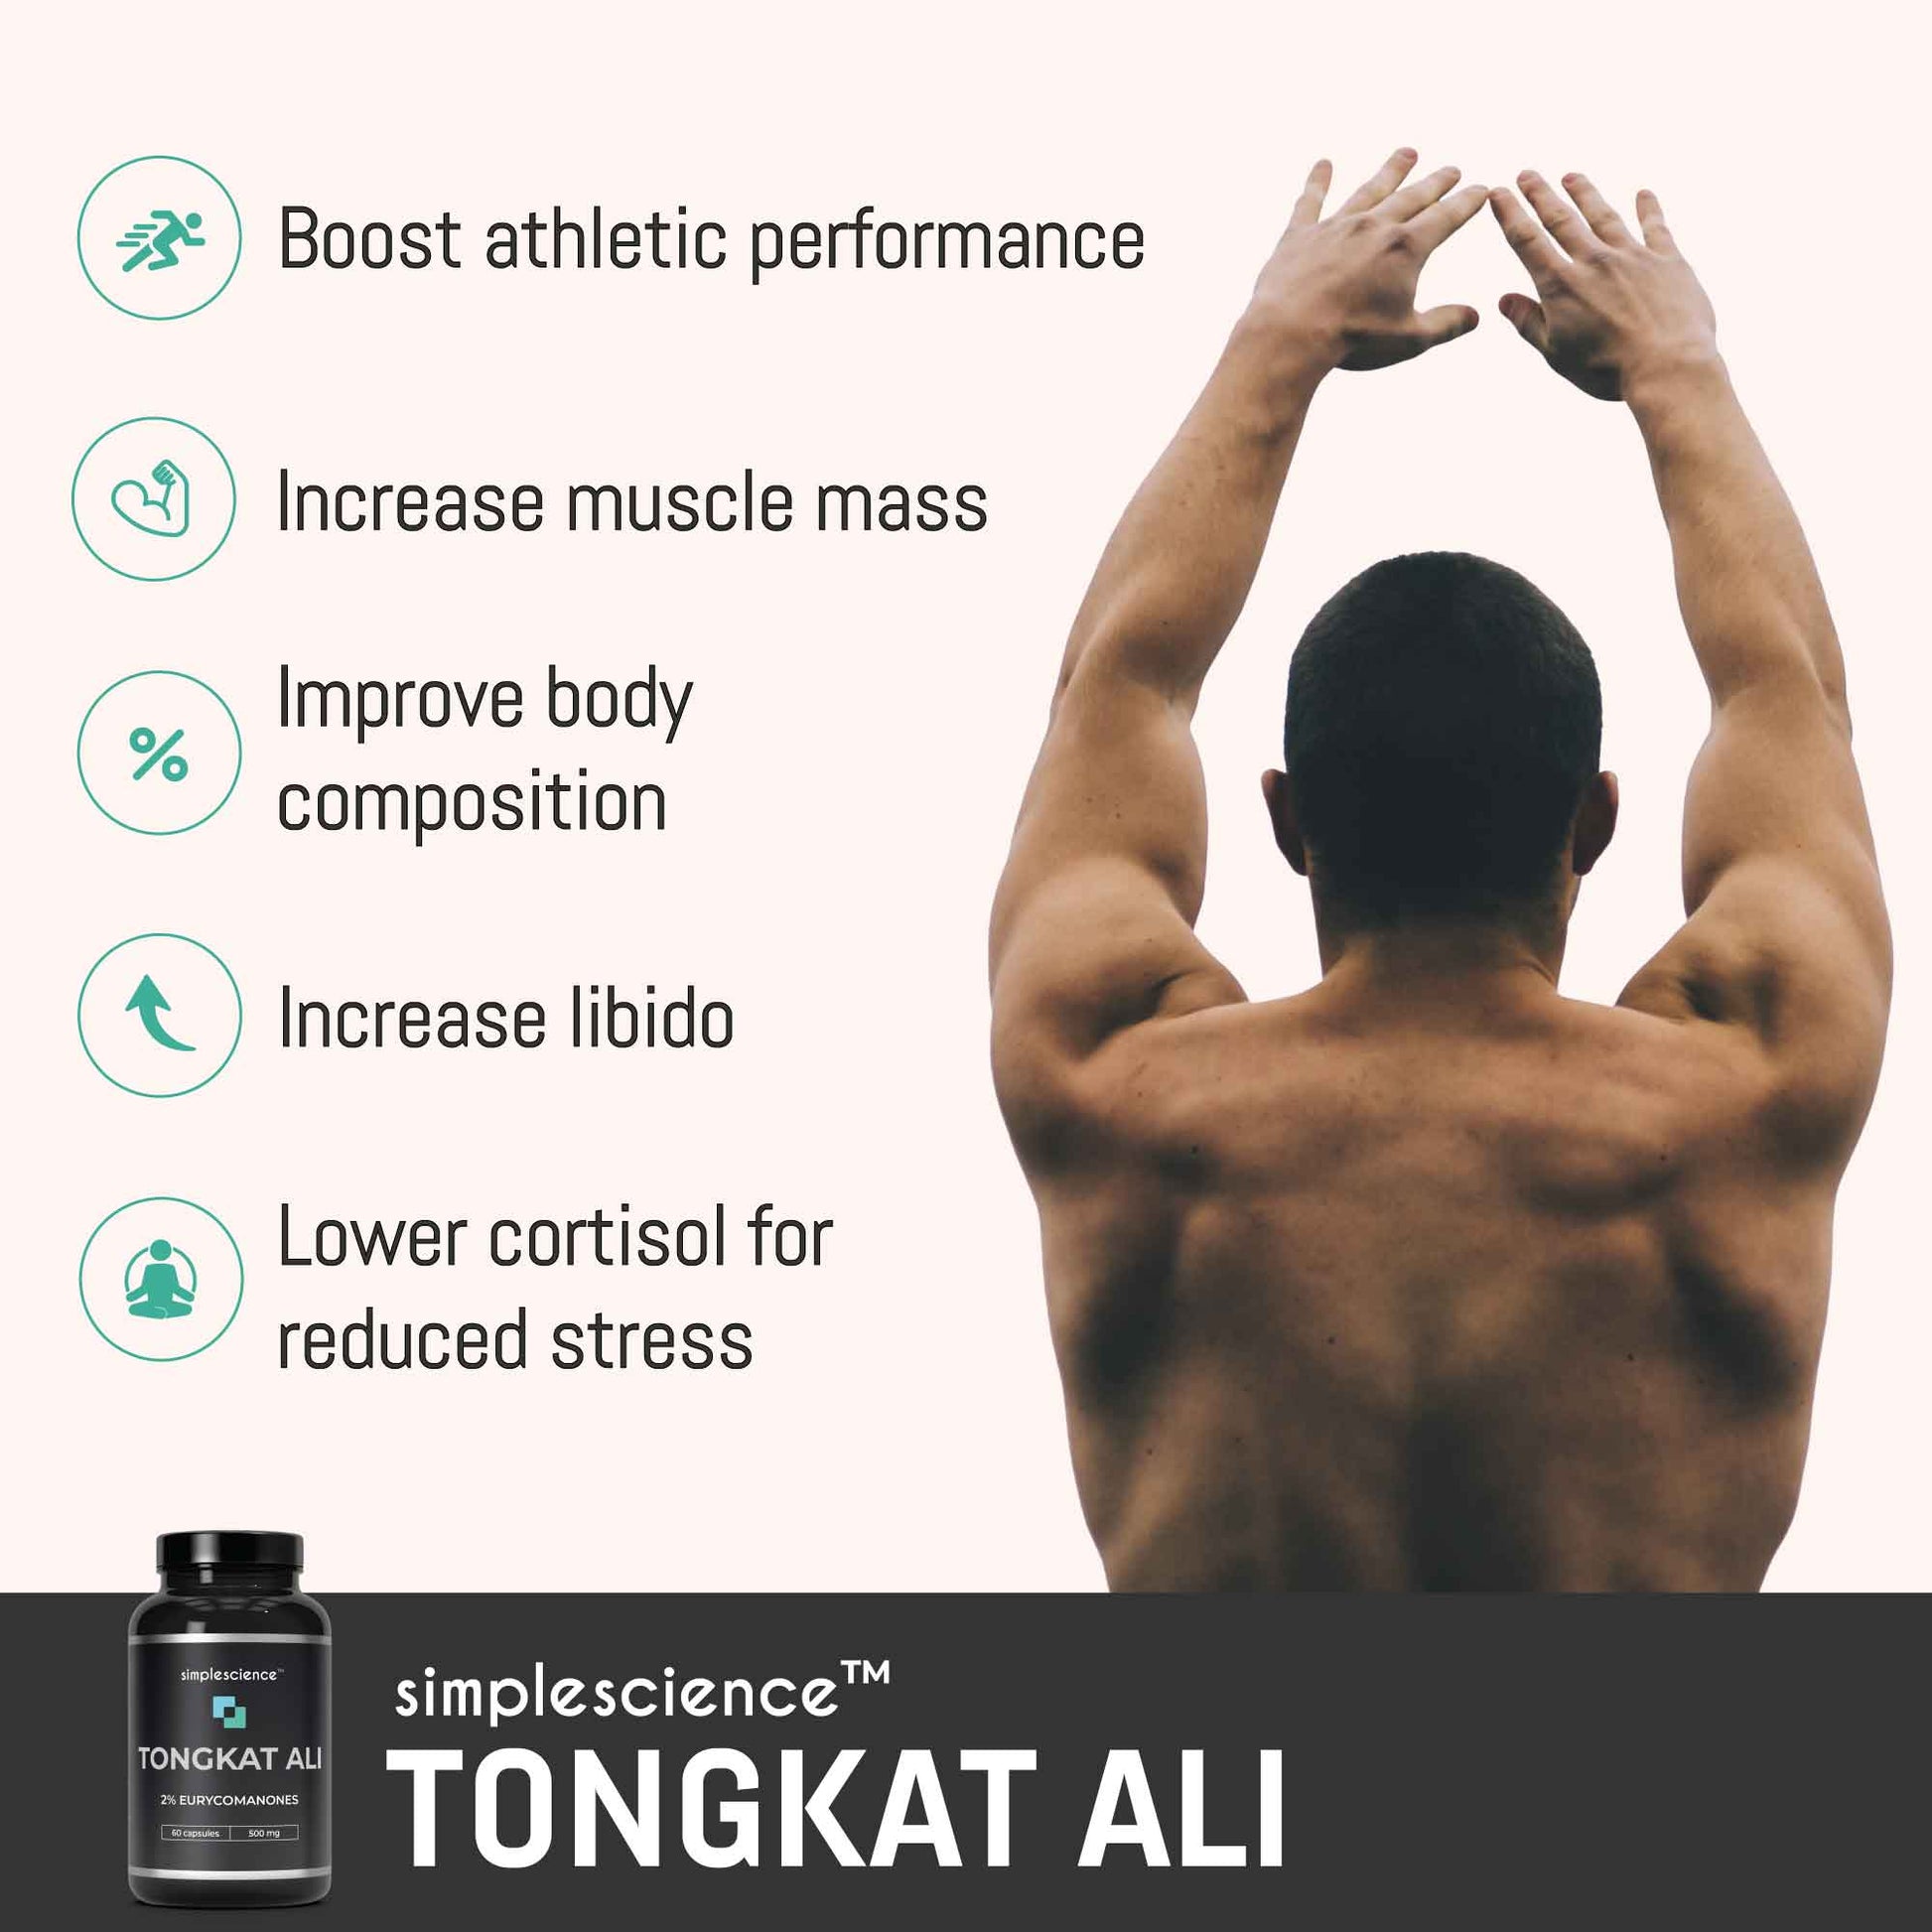 Tongkat Ali 500mg best supplement tongat tonkat booster eurycomanones Andrew Huberman stack muscle mass building simplescience 60 capsules athletic performance lower cortisol herbal